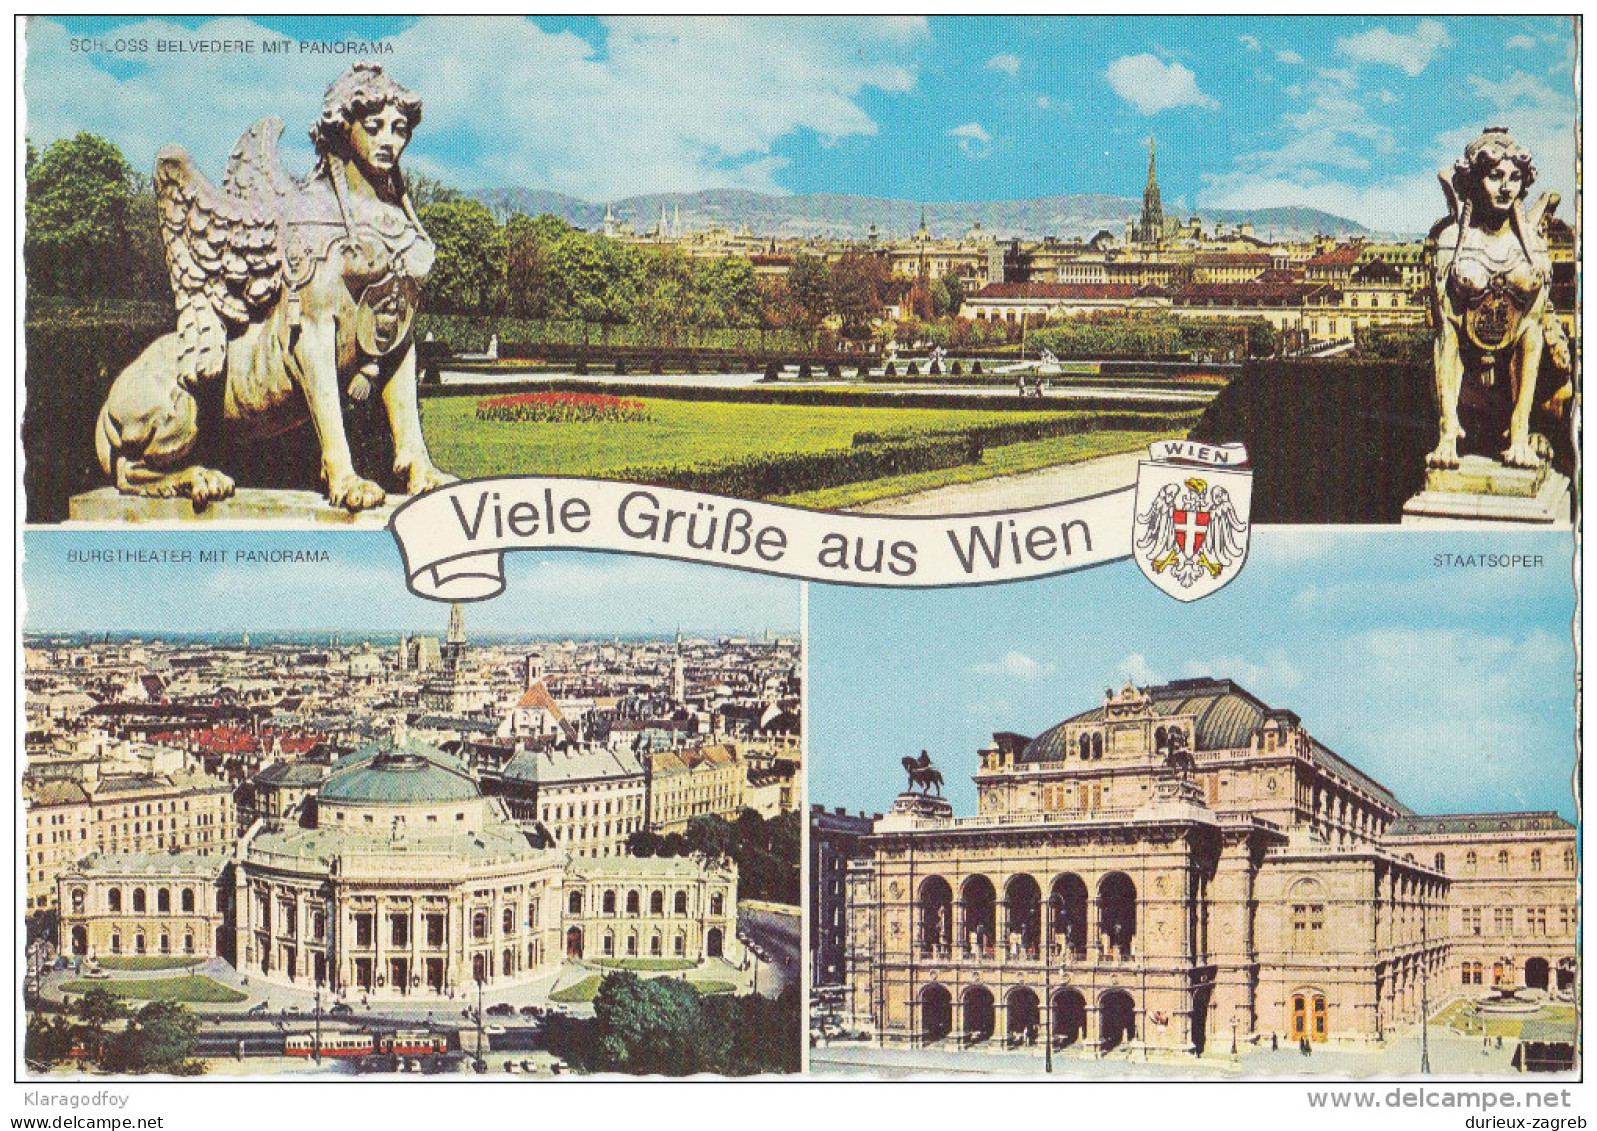 Vienna old postcard travelled 1976 bb151028